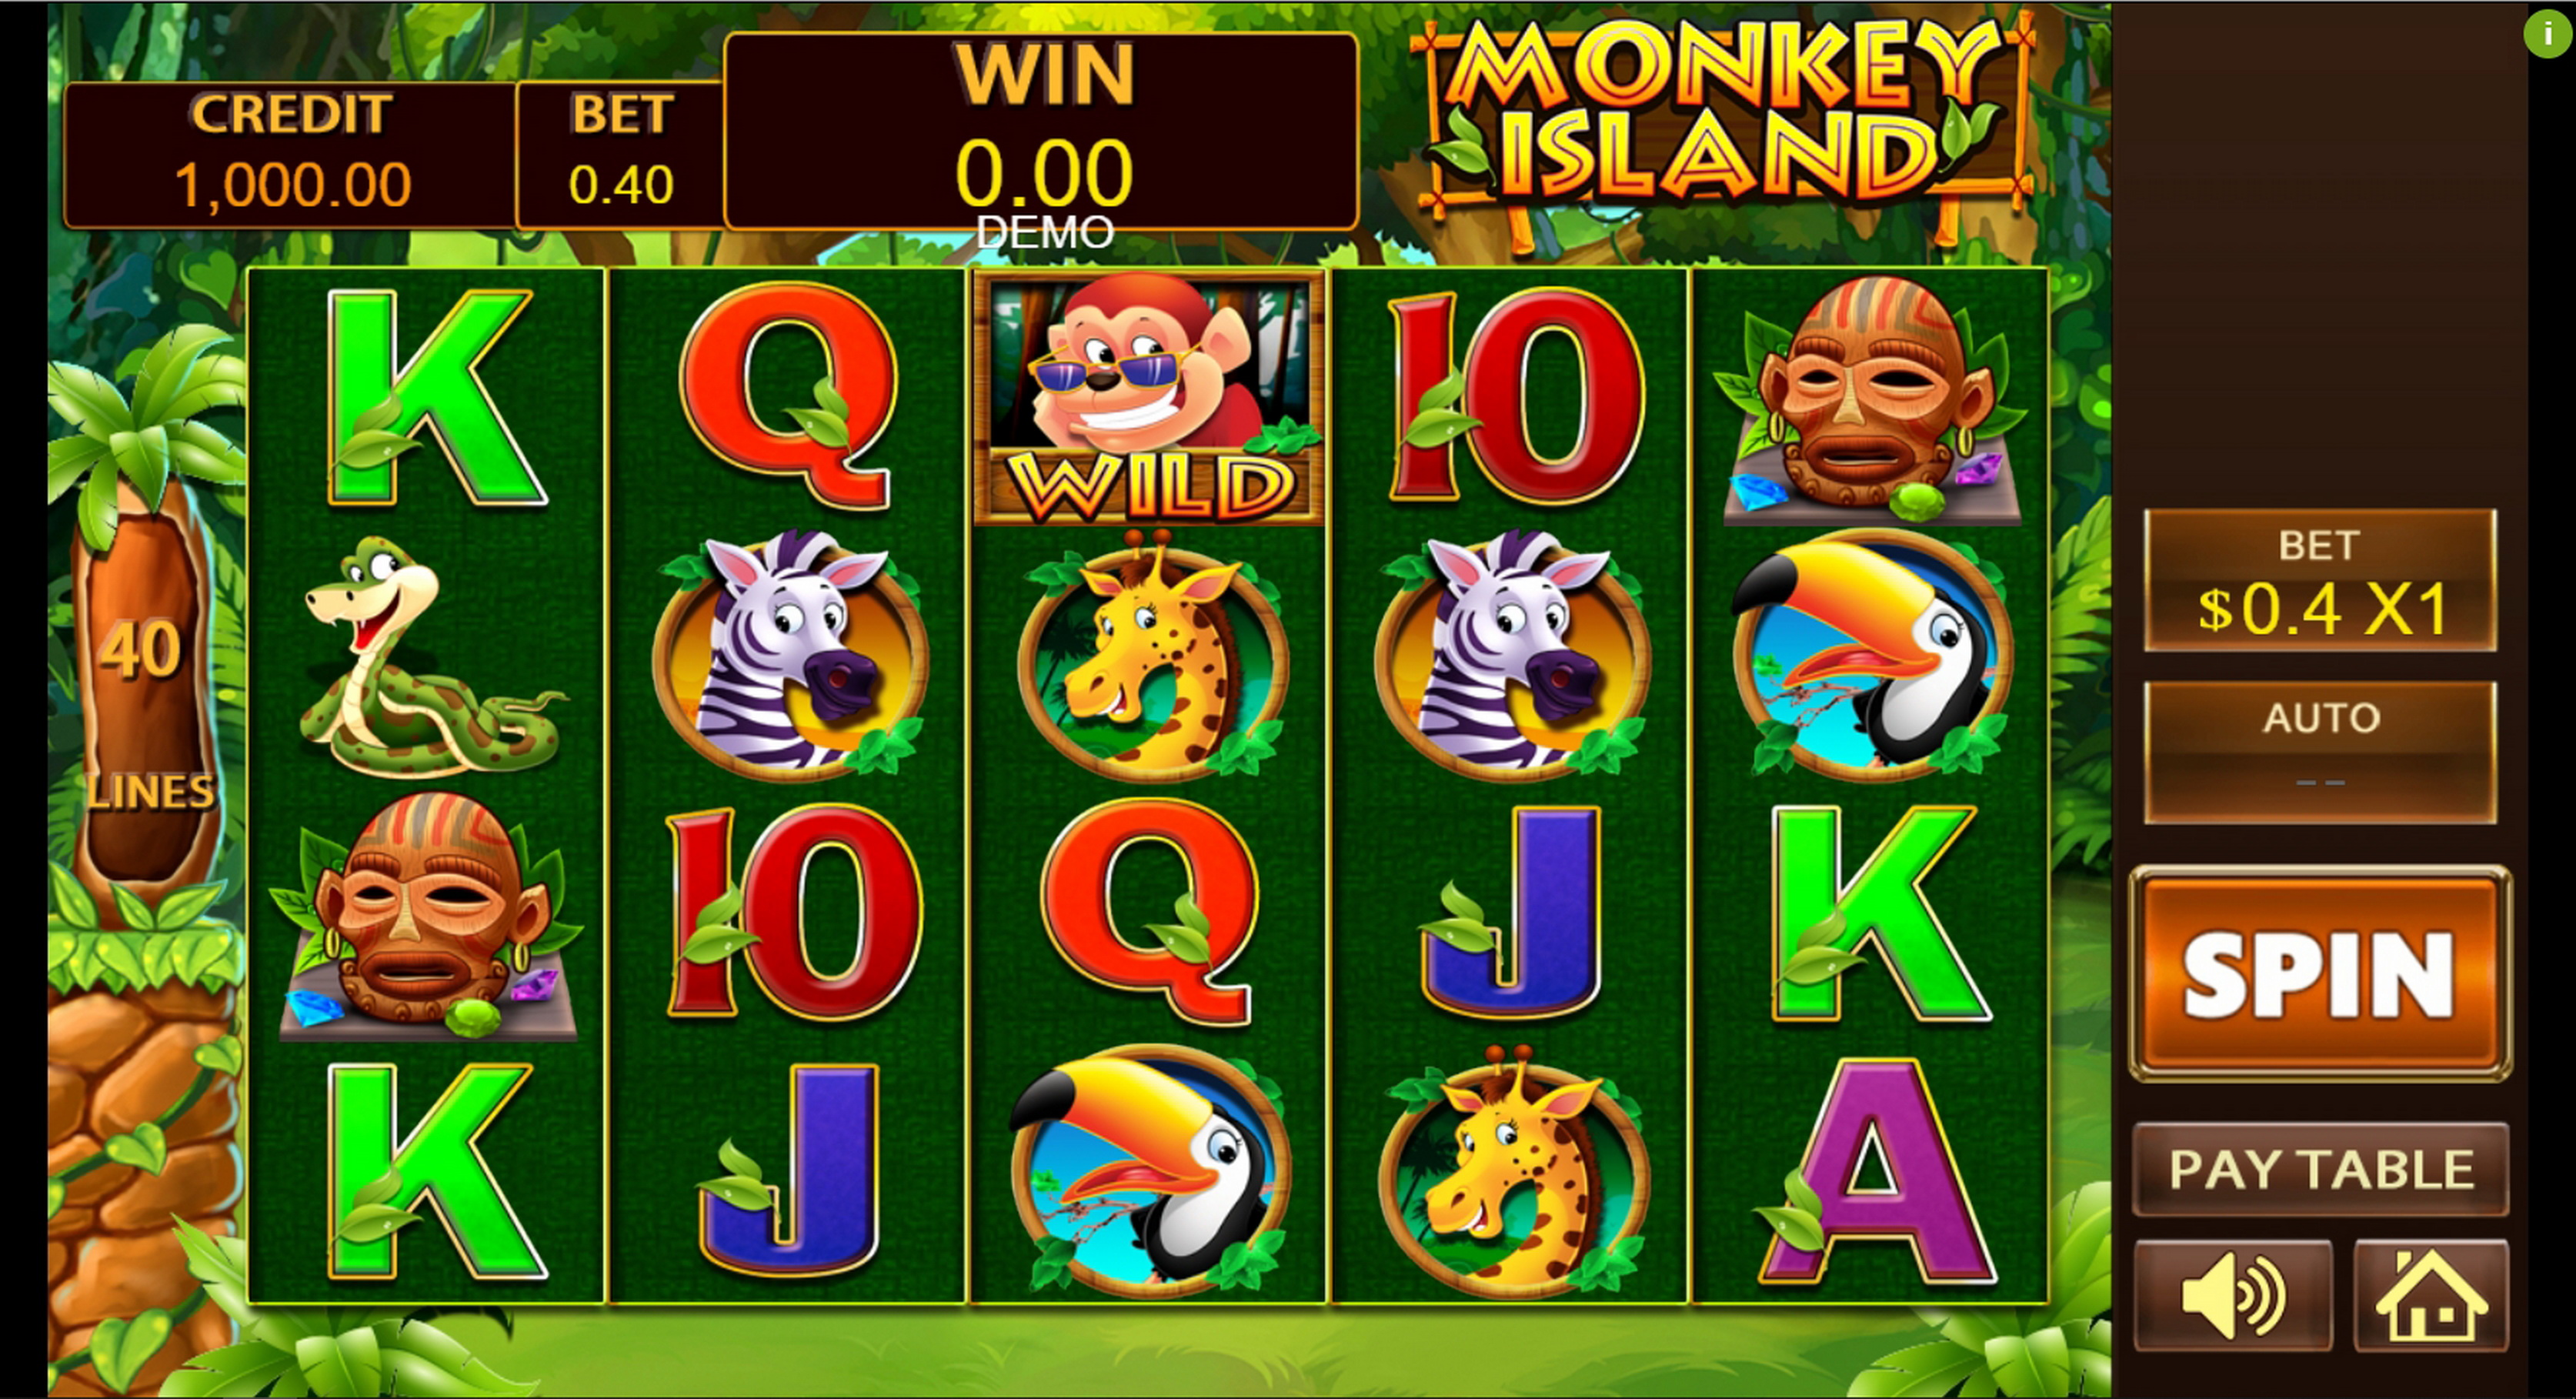 Reels in Monkey Island Slot Game by PlayStar